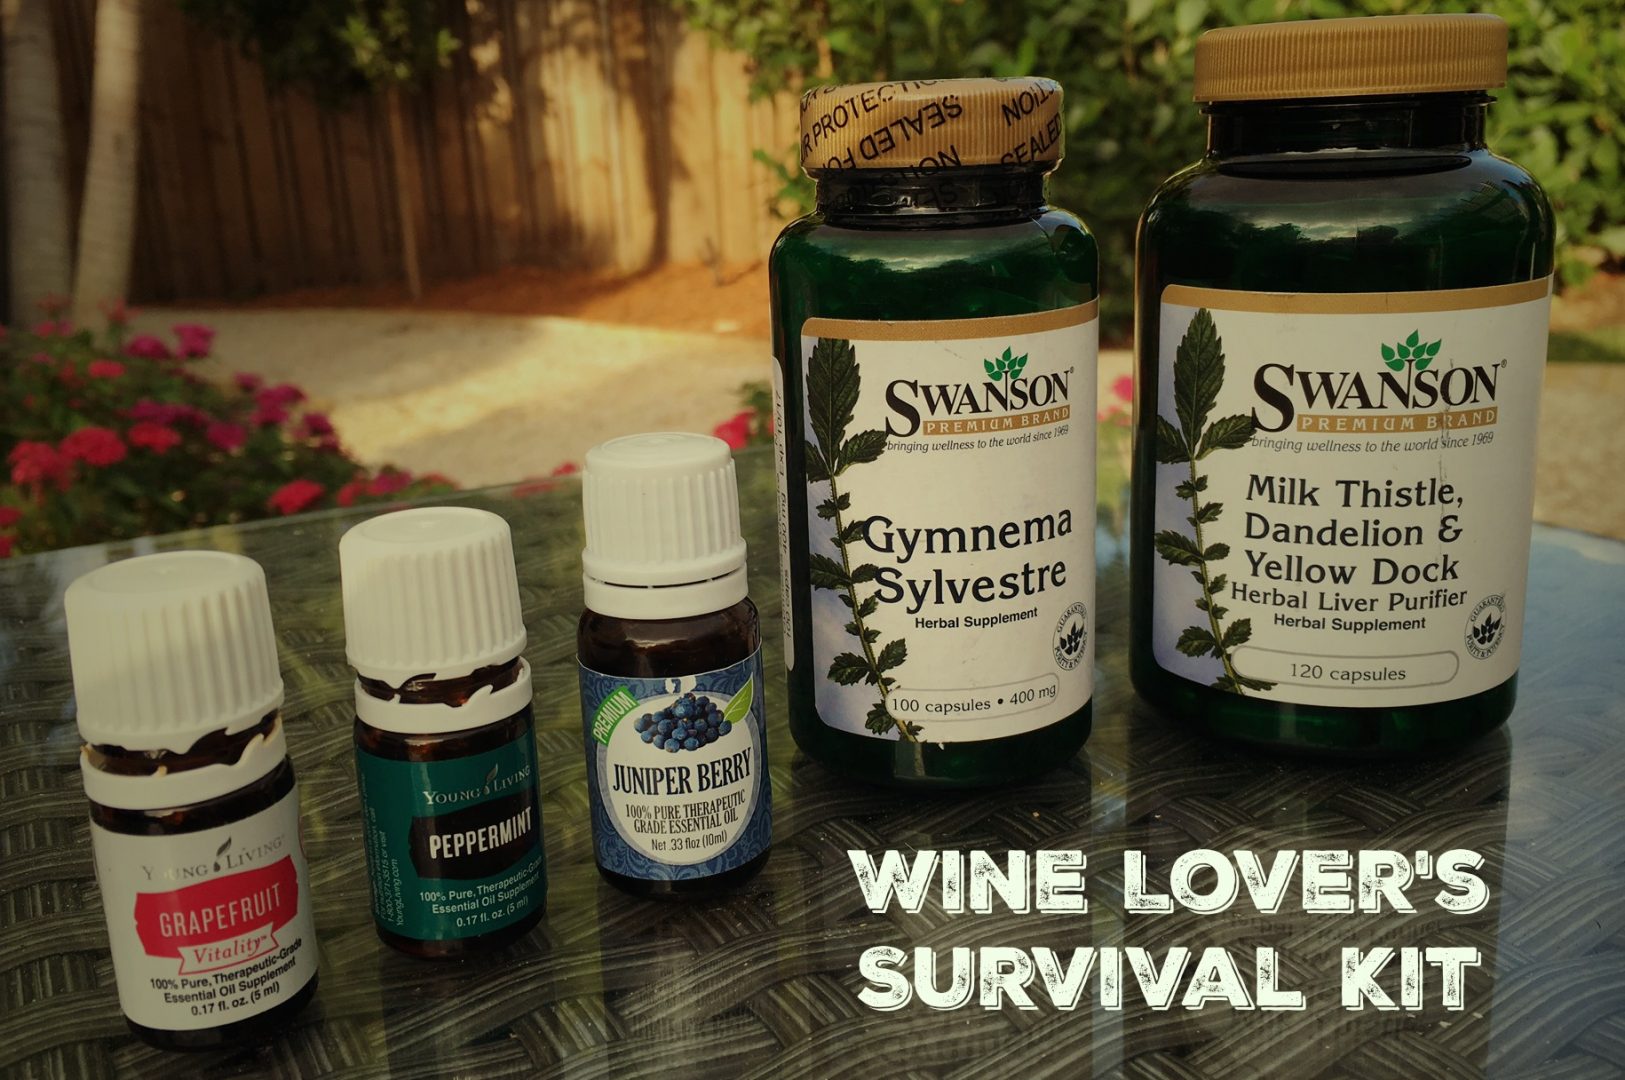 The Wine Lover's Survival Kit